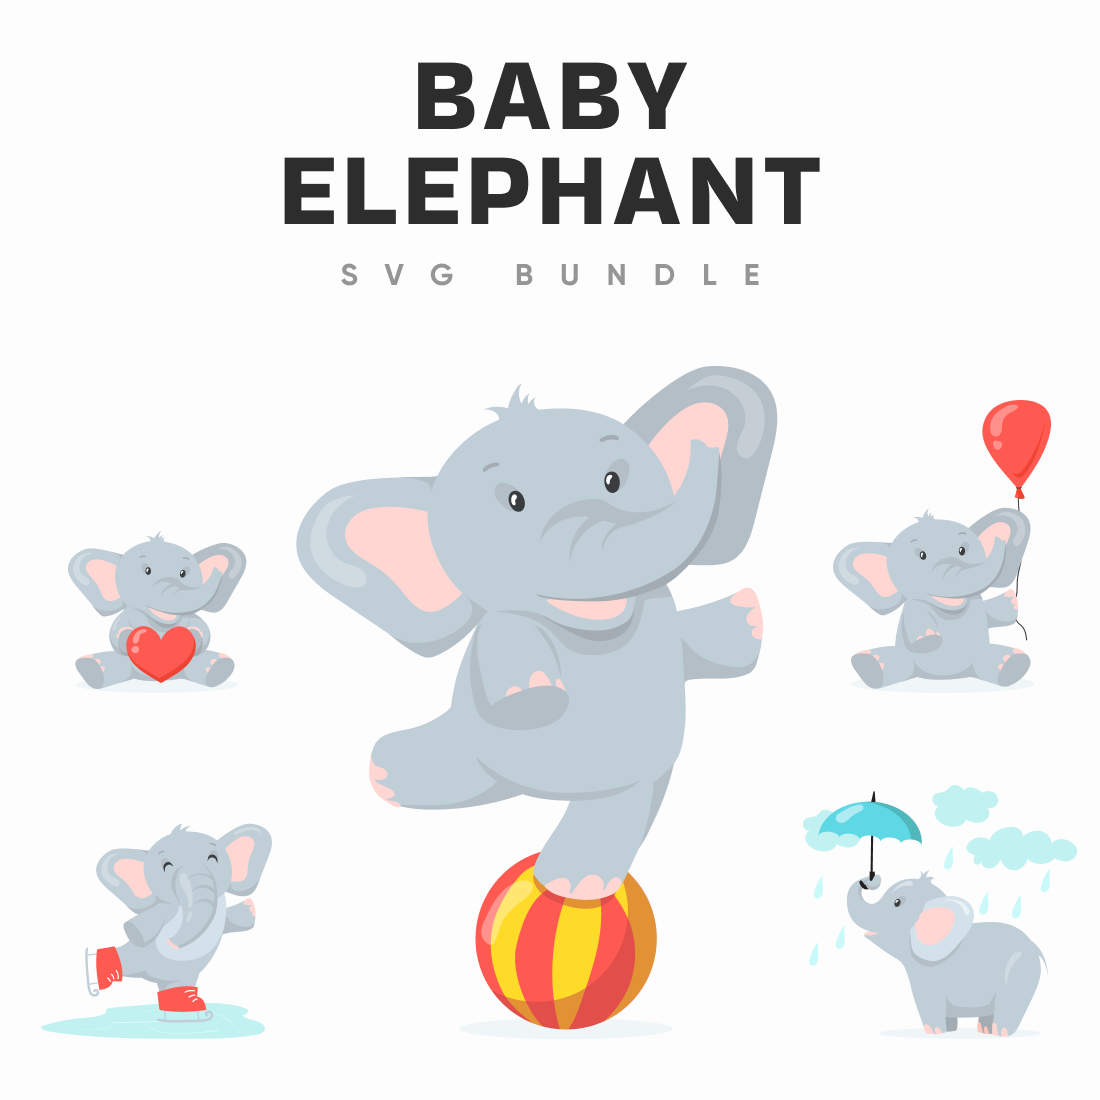 baby elephant svg bundle cover image.